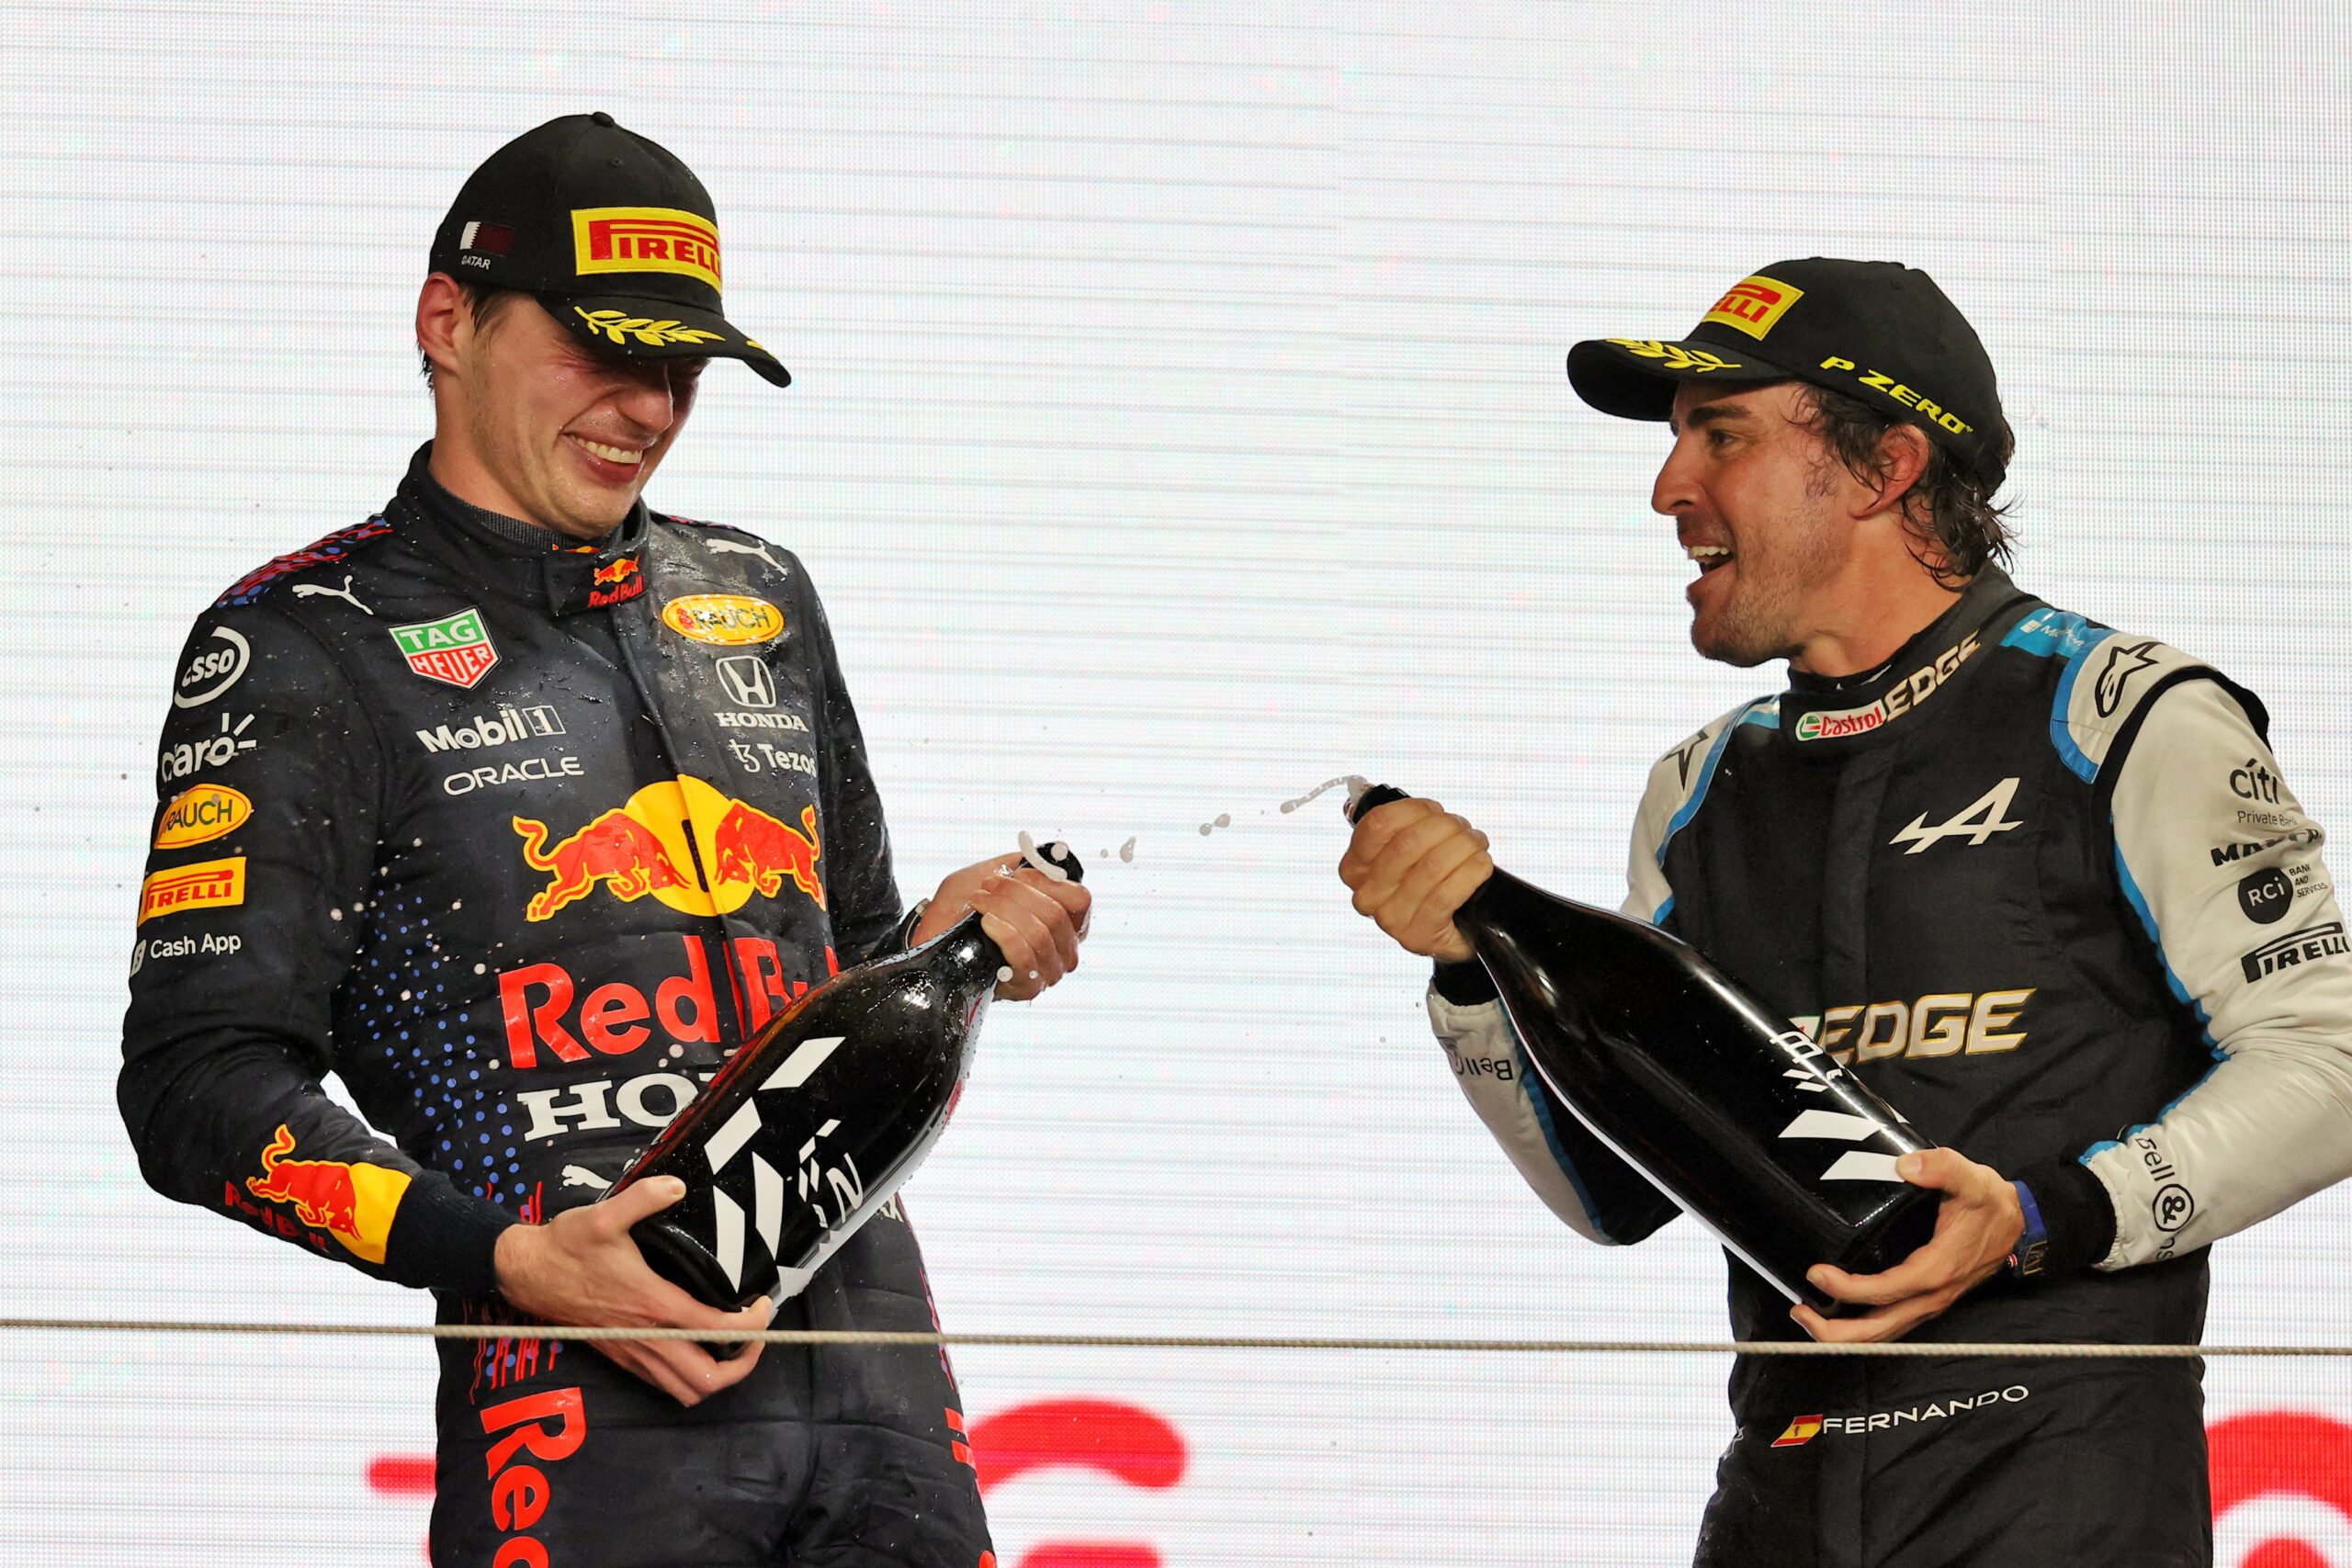 Max and Alonso celebrates on Podium